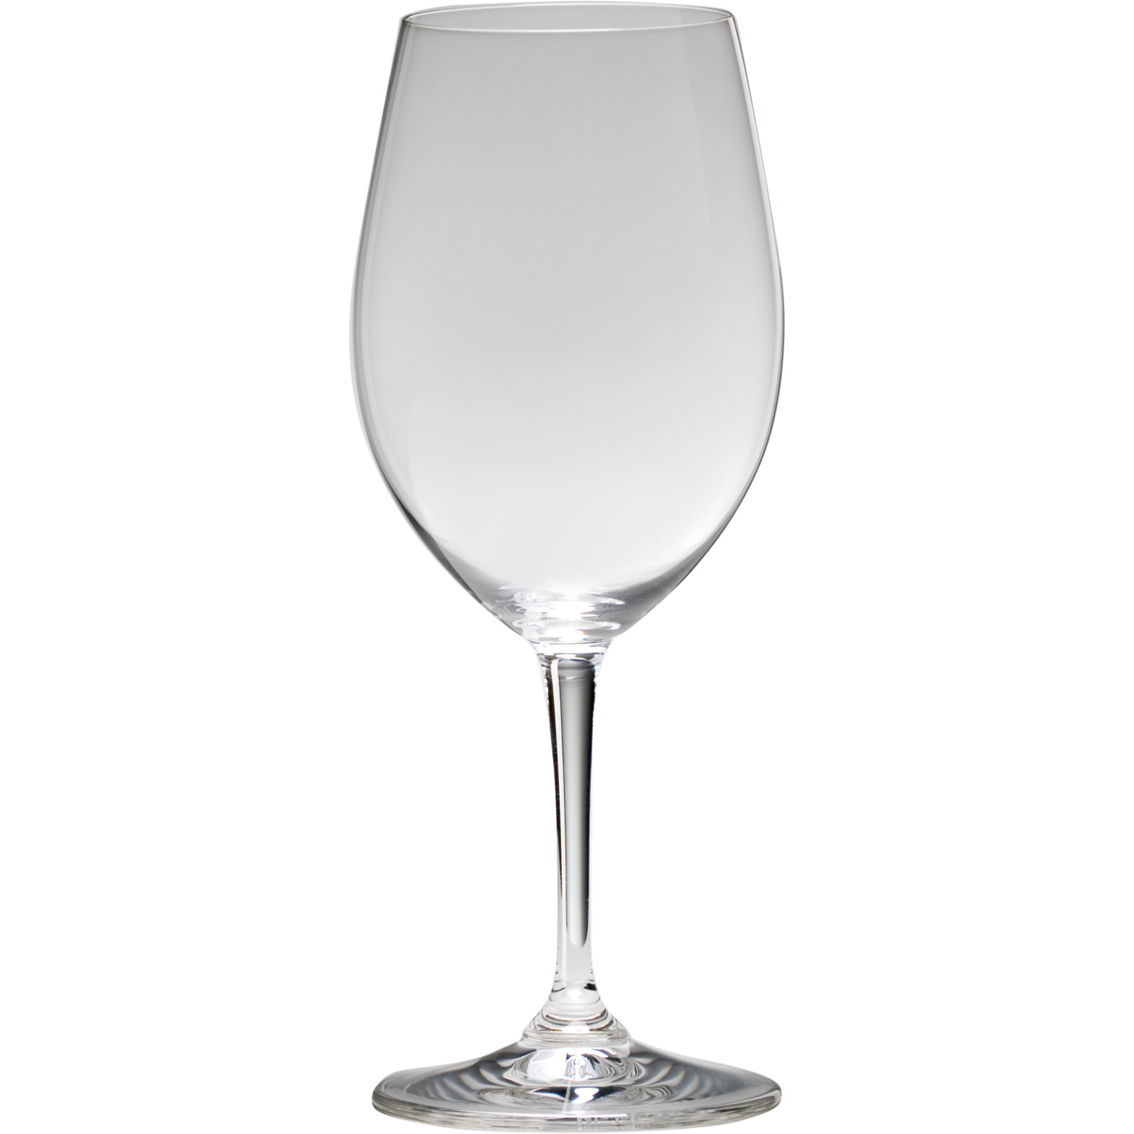 Riedel Bravissimo Wine Glasses Set 4 pc. - Image 3 of 5